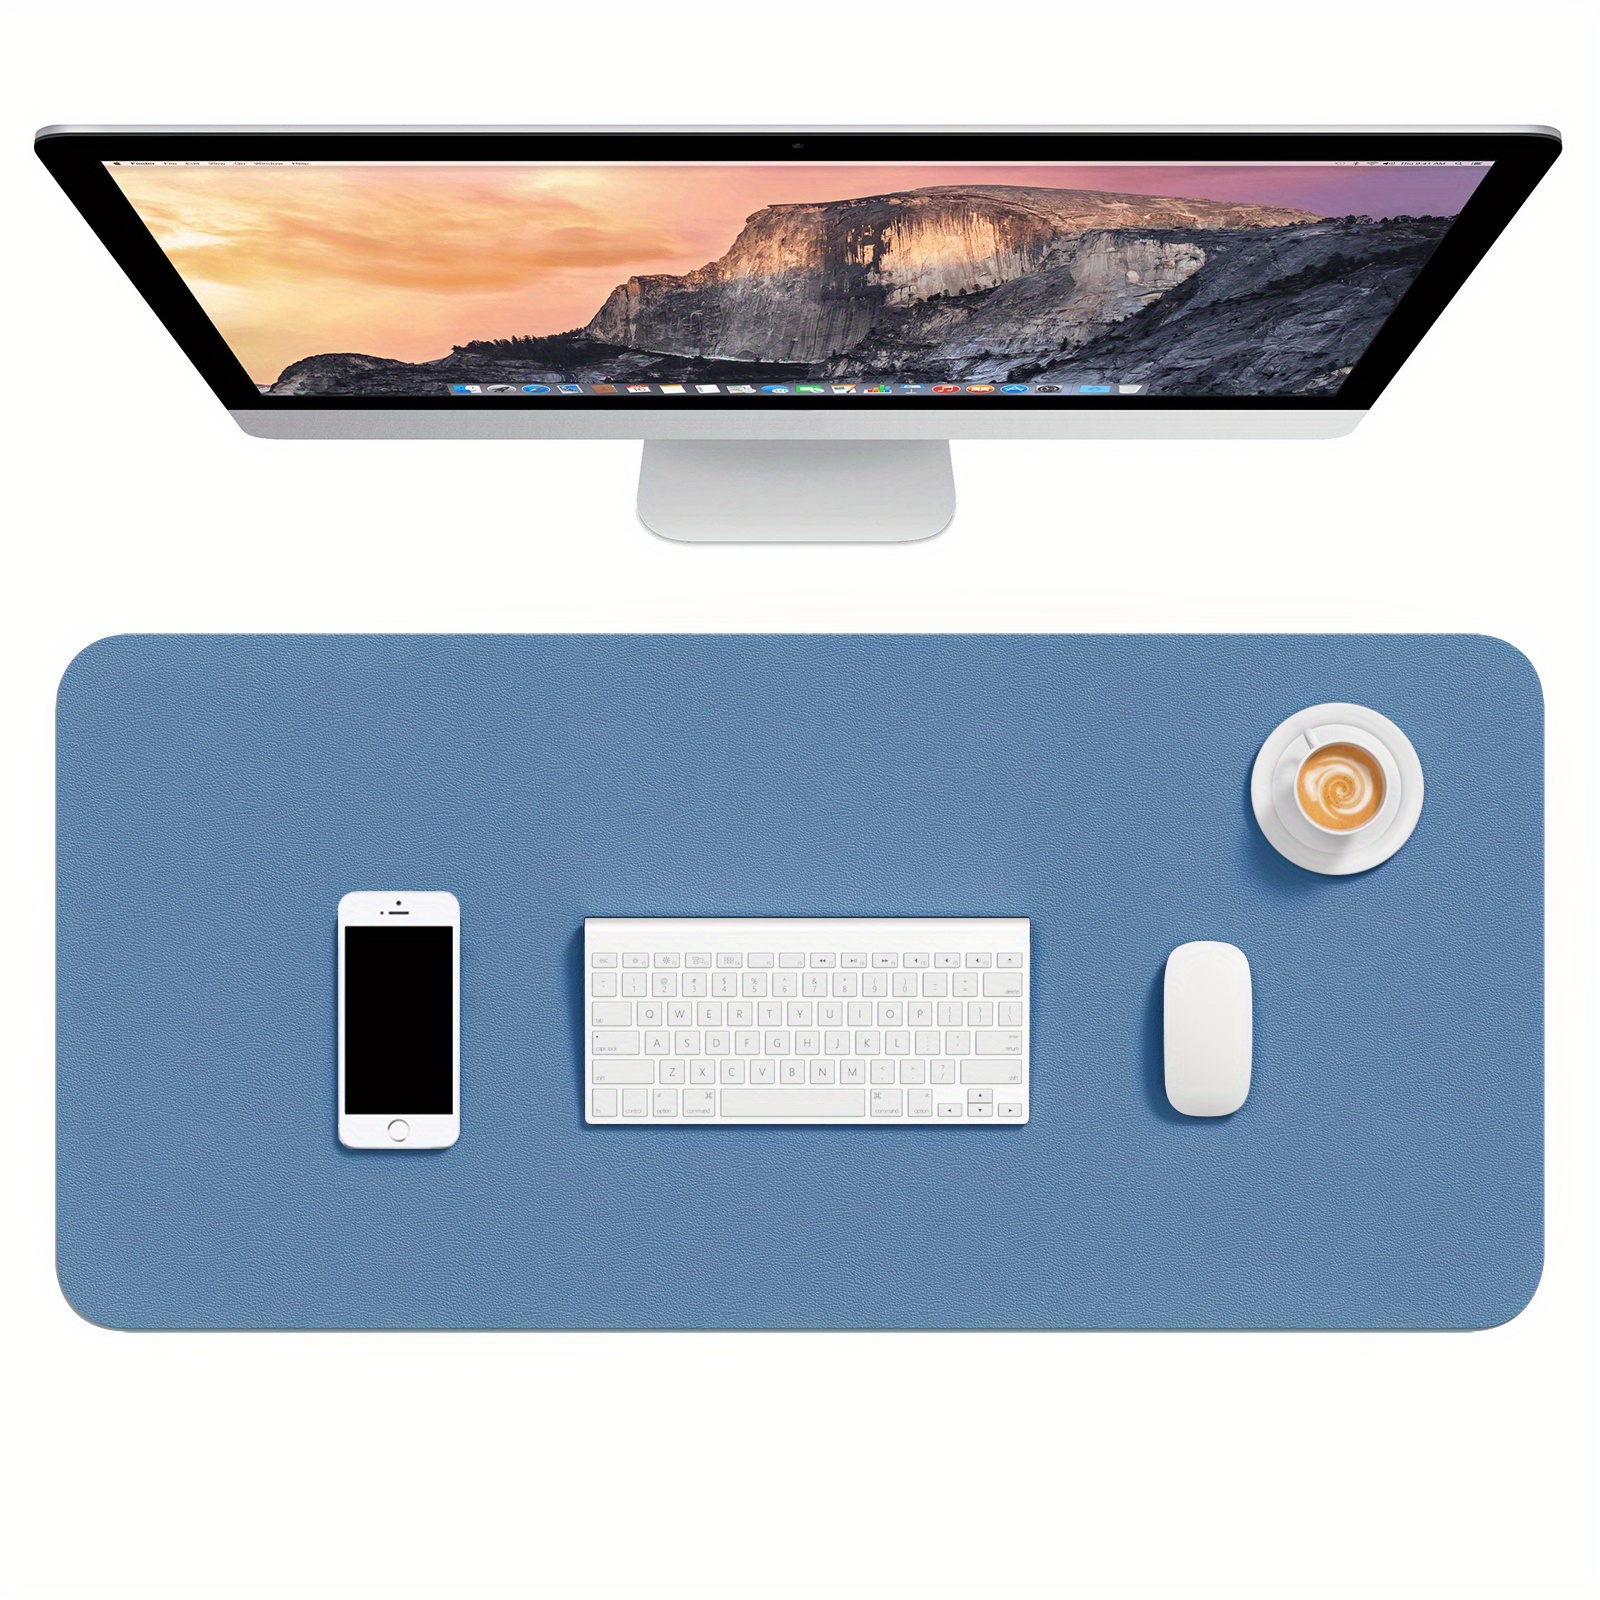 K KNODEL Desk Mat, Mouse Pad, 23.6 x 13.8, Light Blue